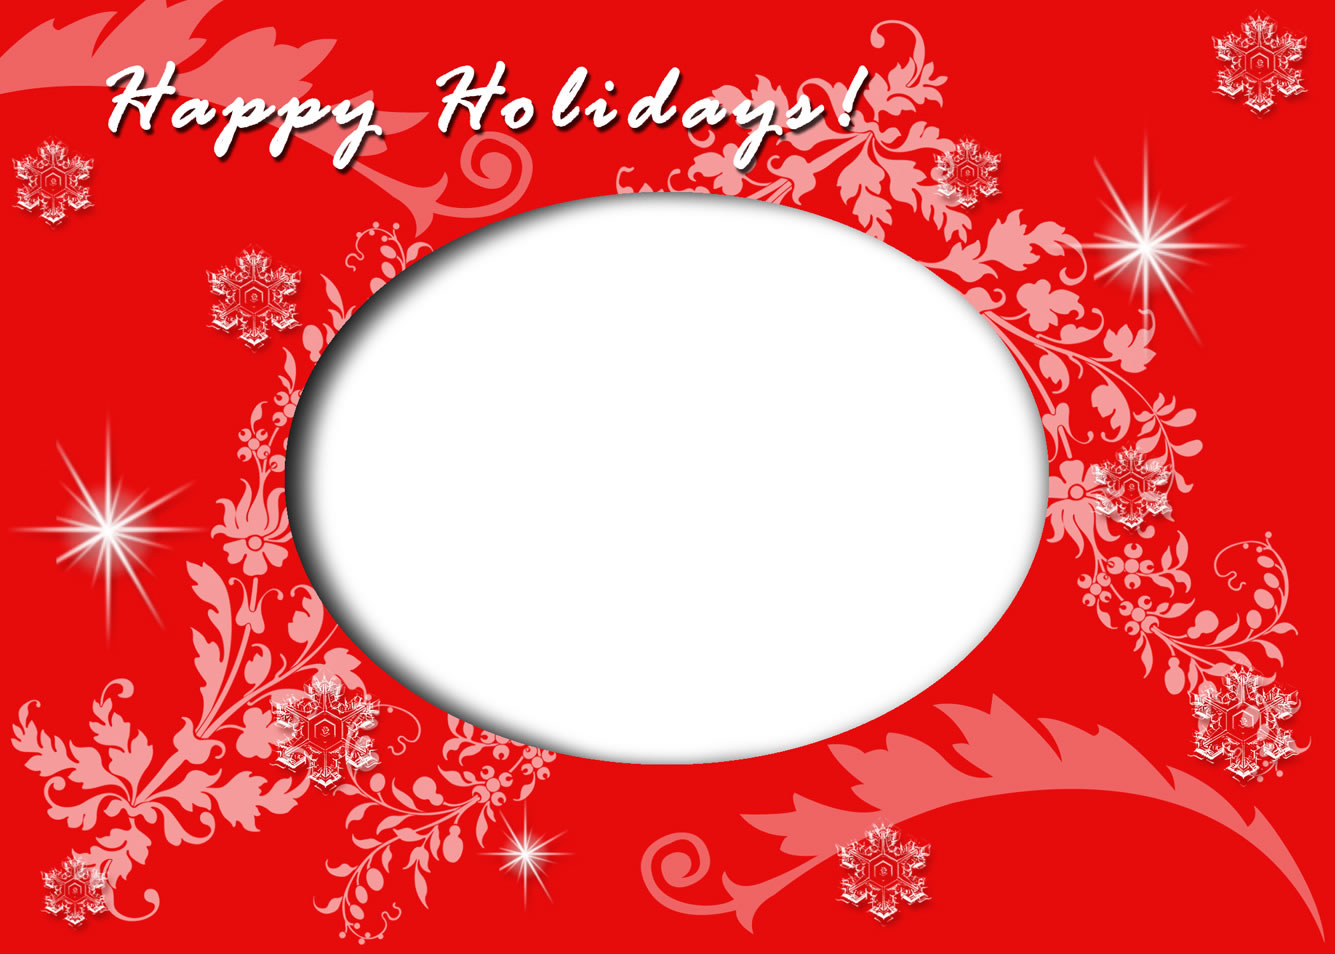 Christmas Card Templates | Rtcrita's Blog Inside Christmas Photo Card Templates Photoshop